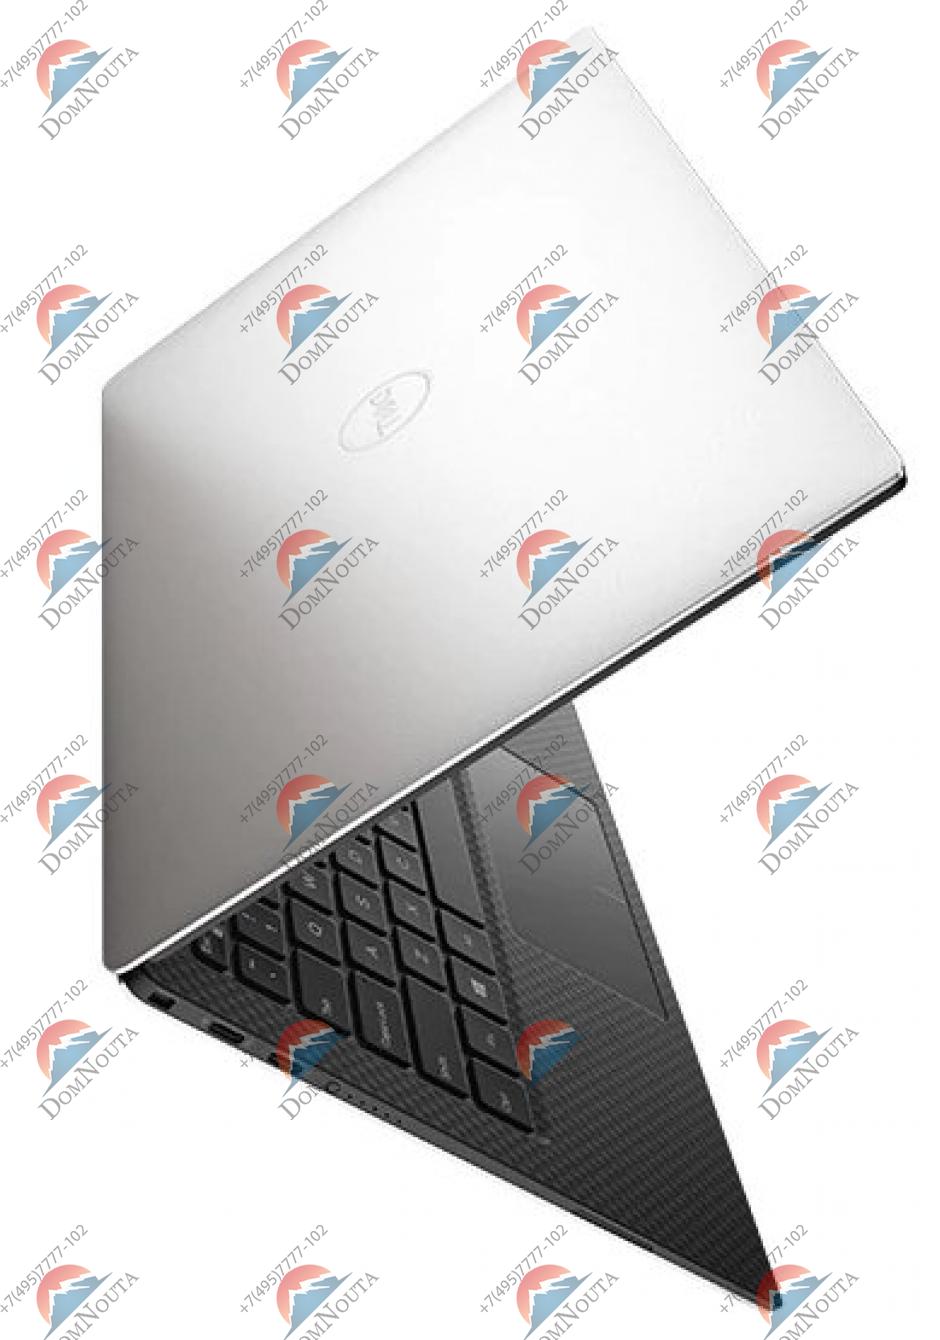 Ультрабук Dell XPS 13 9370